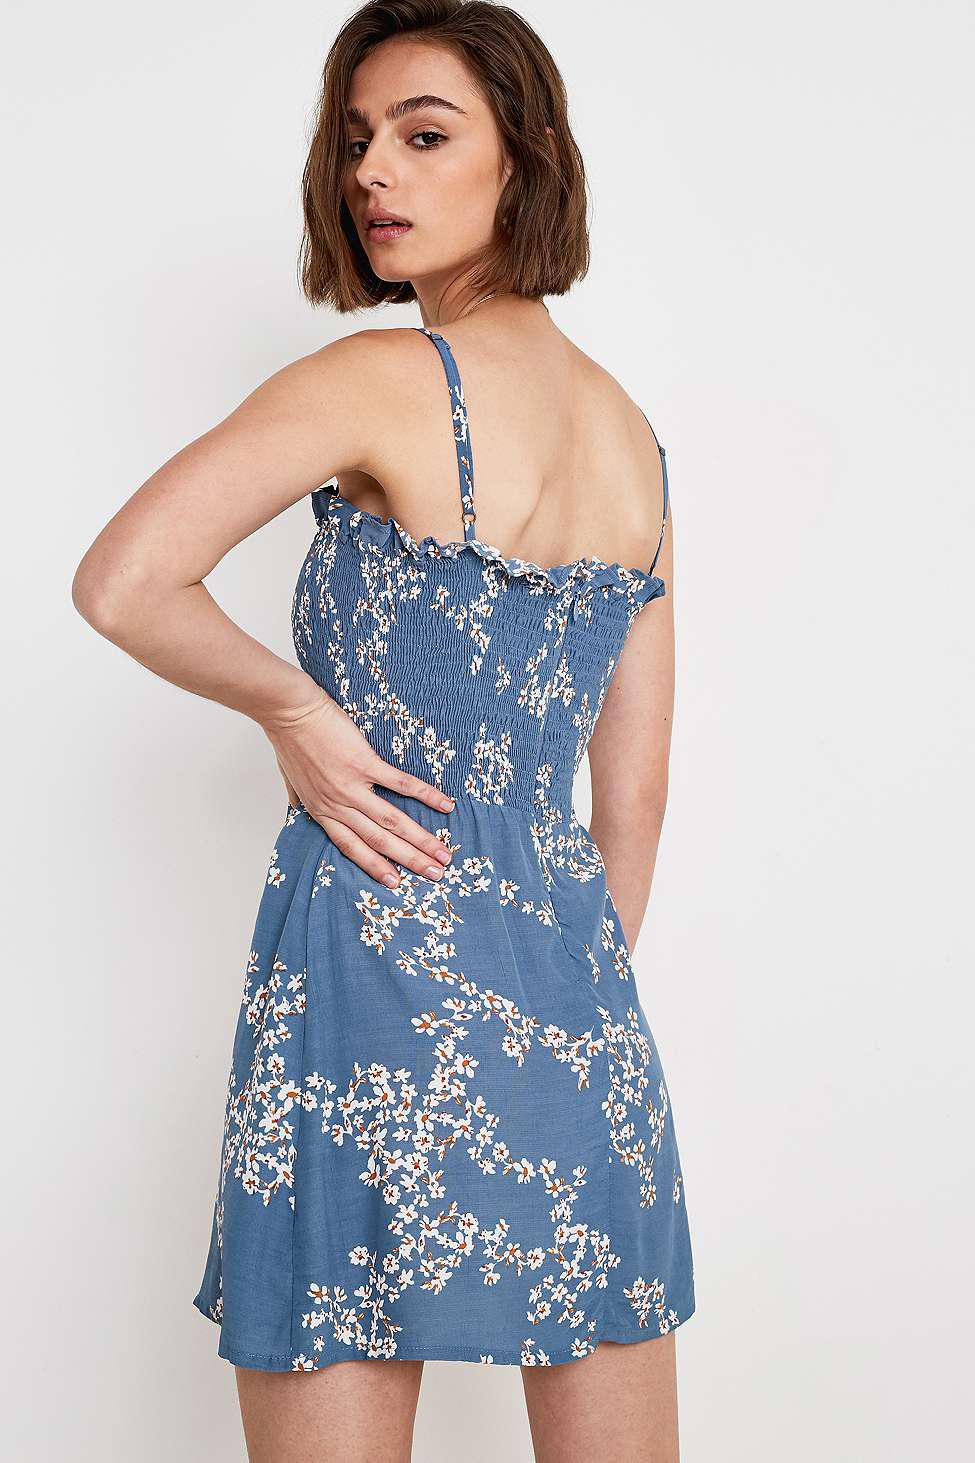 Faithfull The Brand Floral Print Smocked Mini Dress in Blue - Lyst